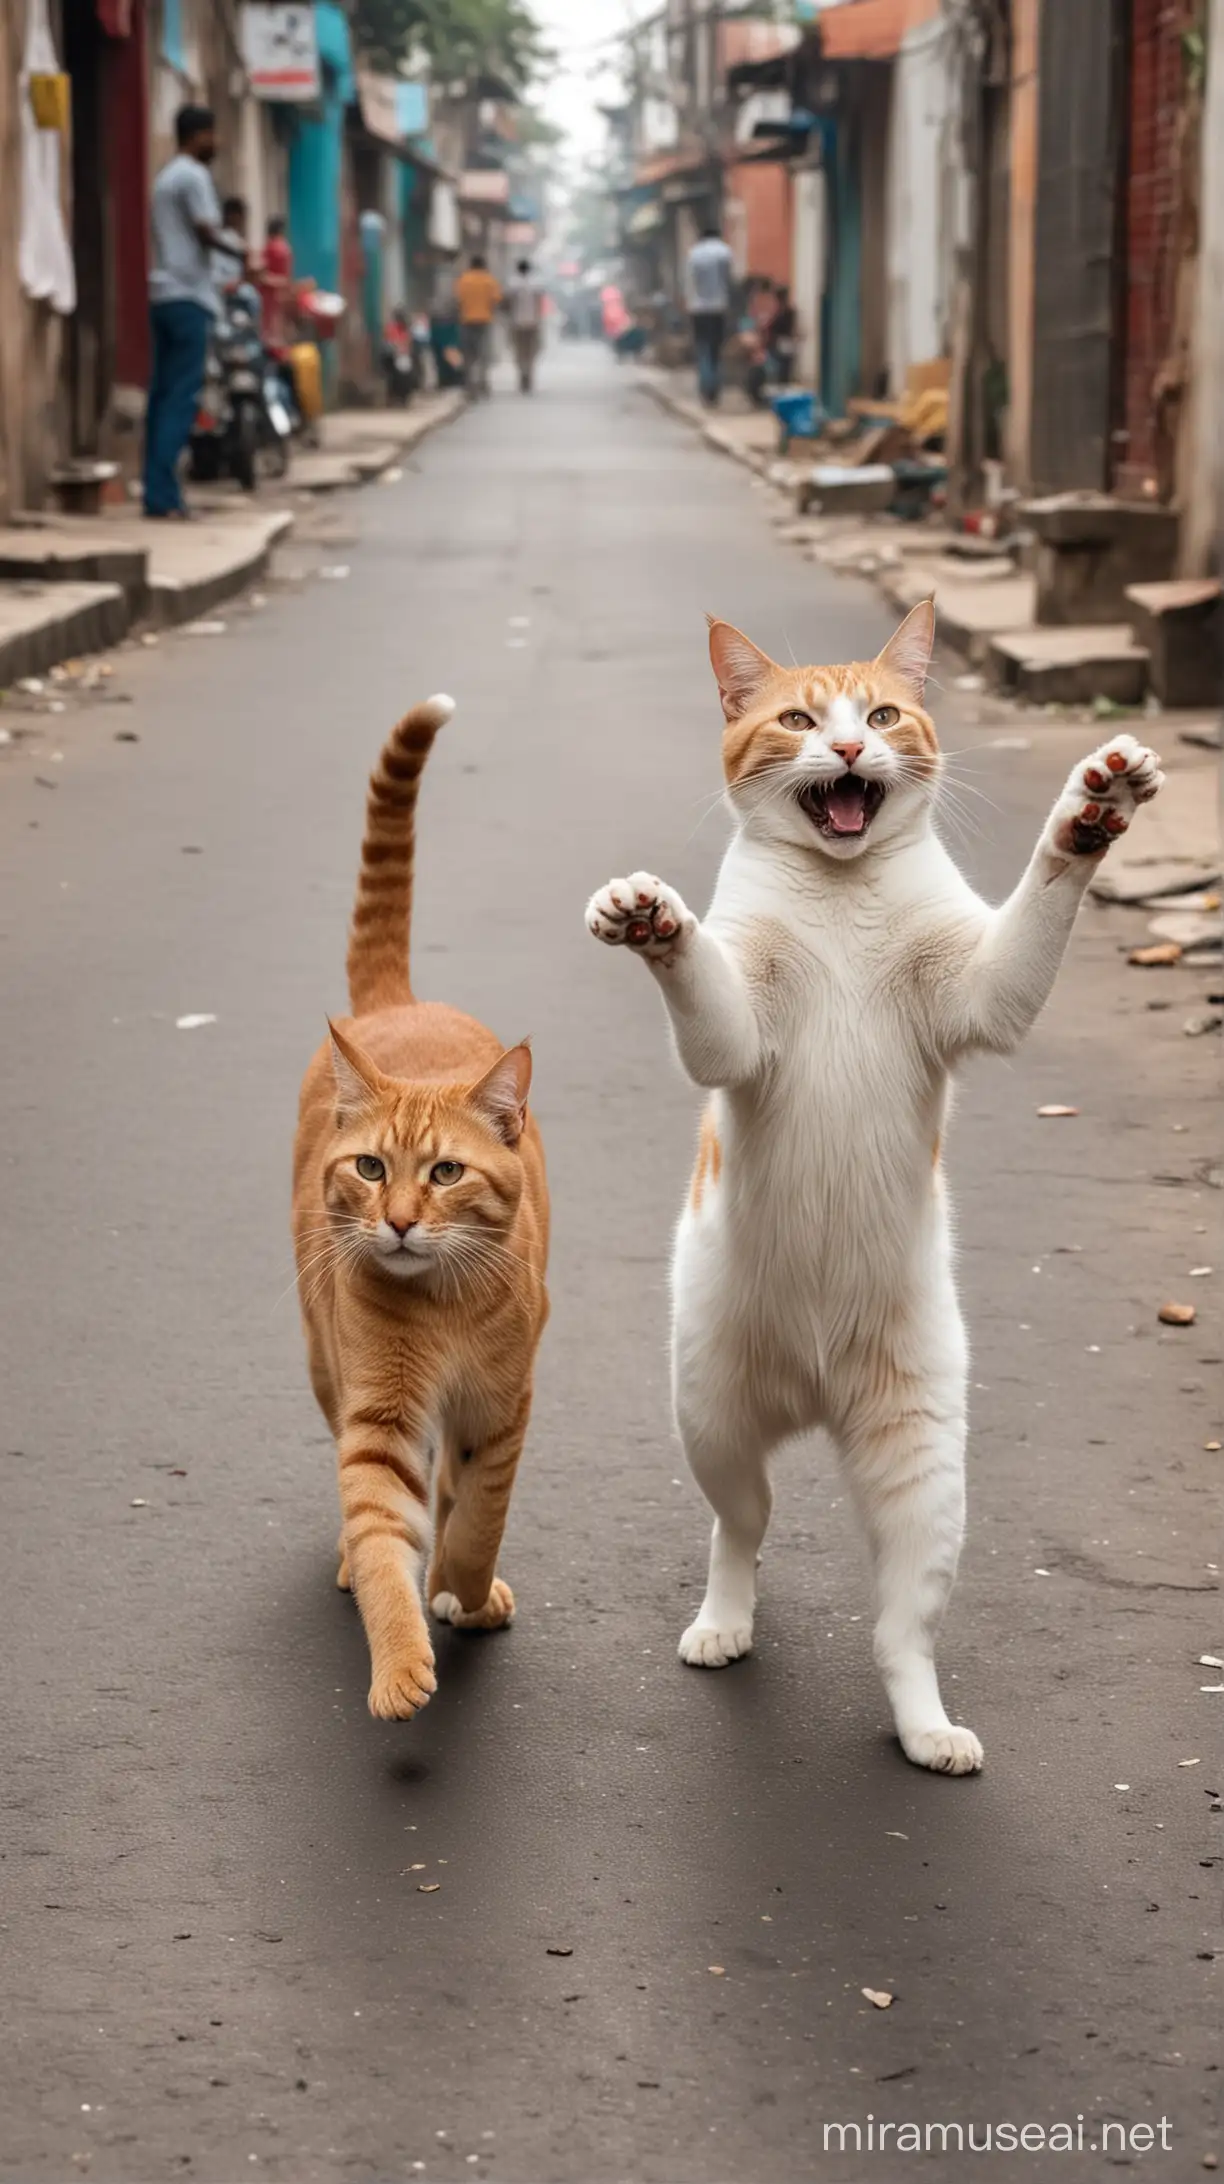 Joyful Indian Cat and Boyfriend Playfully Frolic on the Street